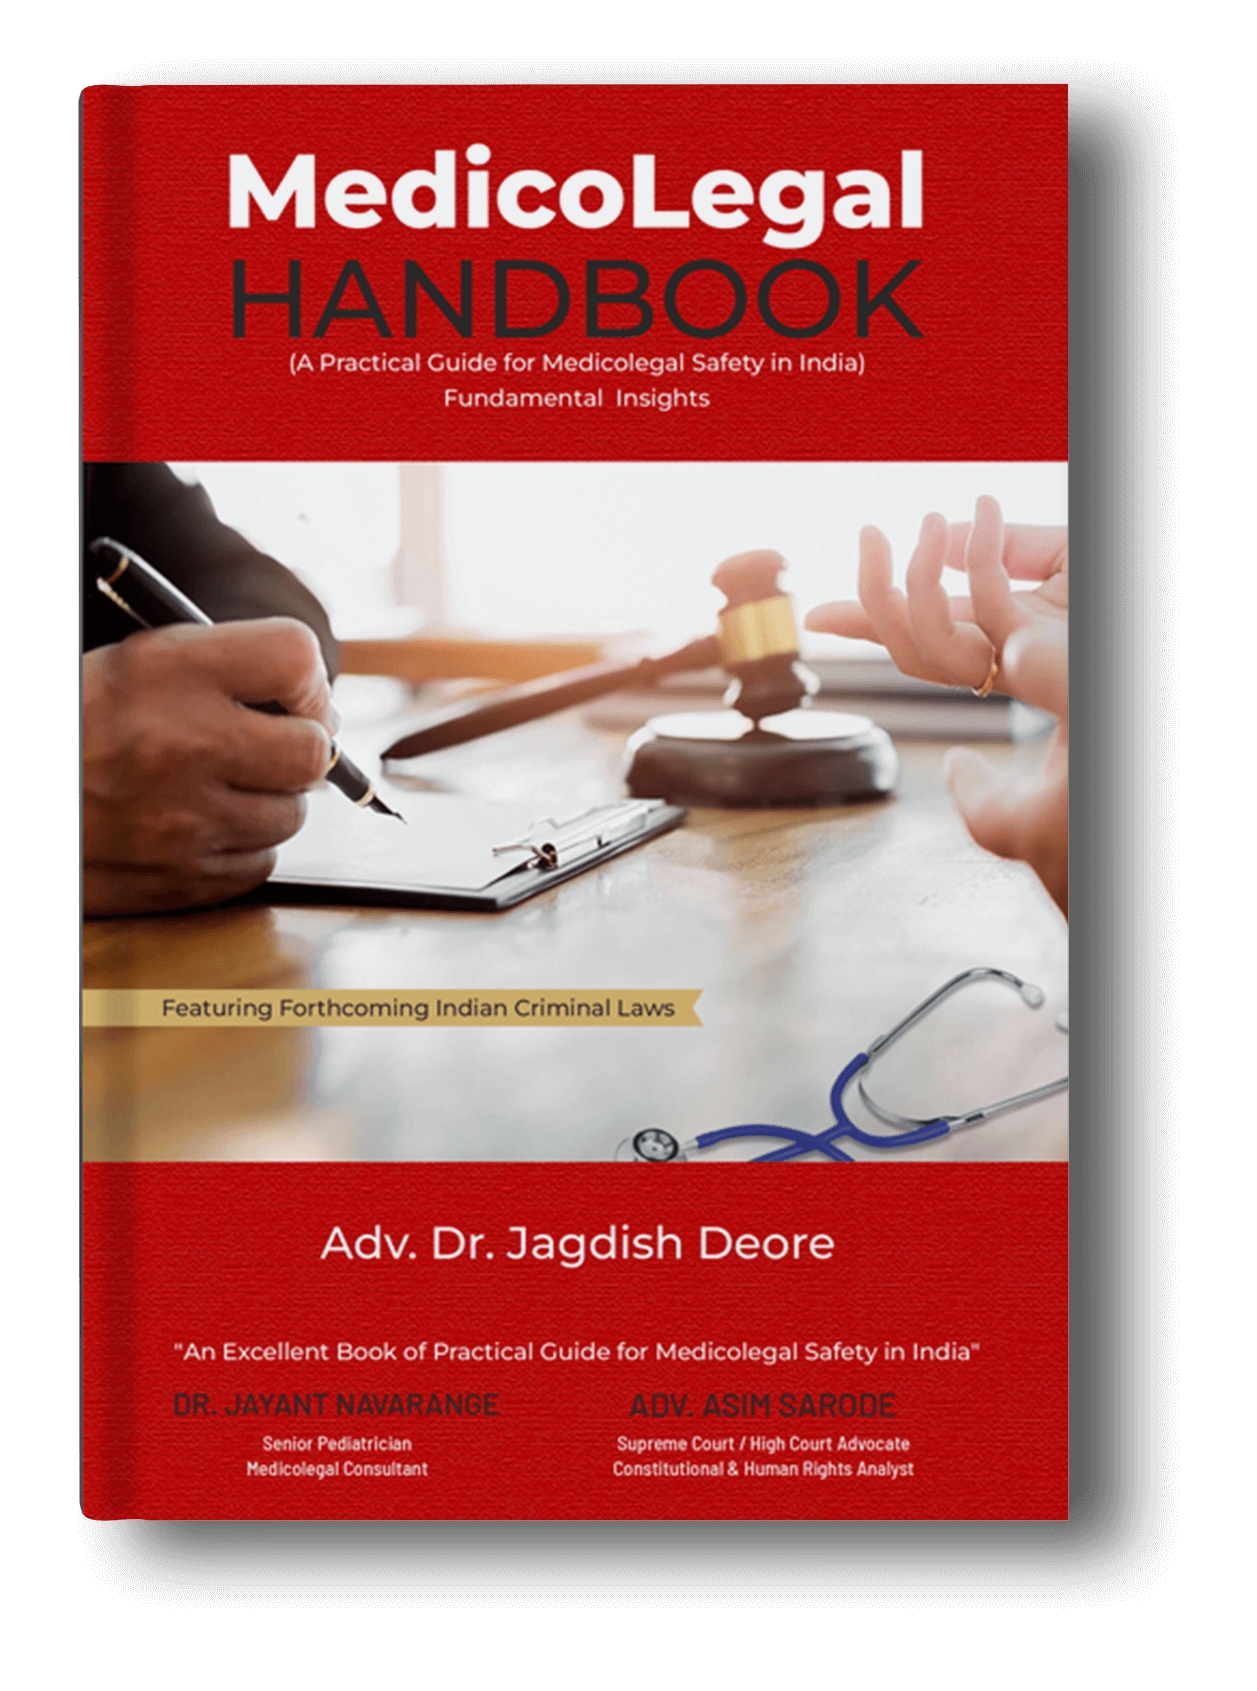 MedicoLegal Handbook Guide